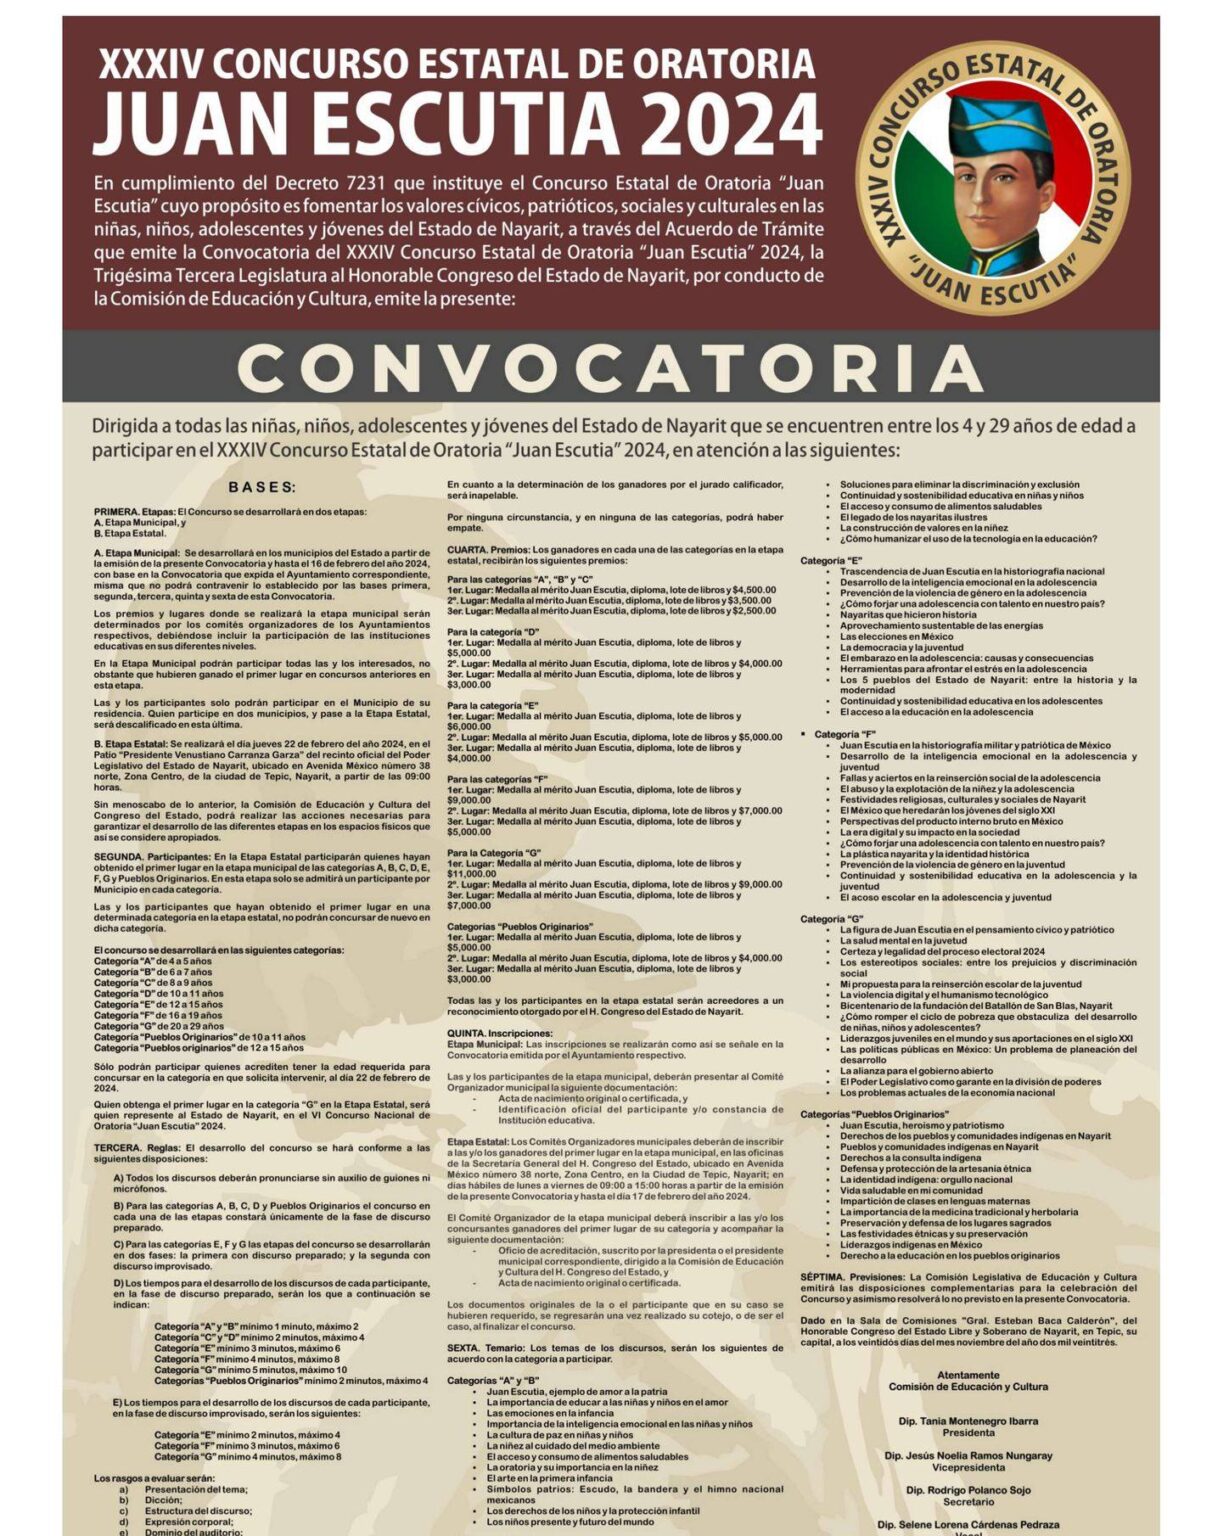 Congreso lanza convocatoria al Concurso Estatal de Oratoria “Juan Escutia” 2024